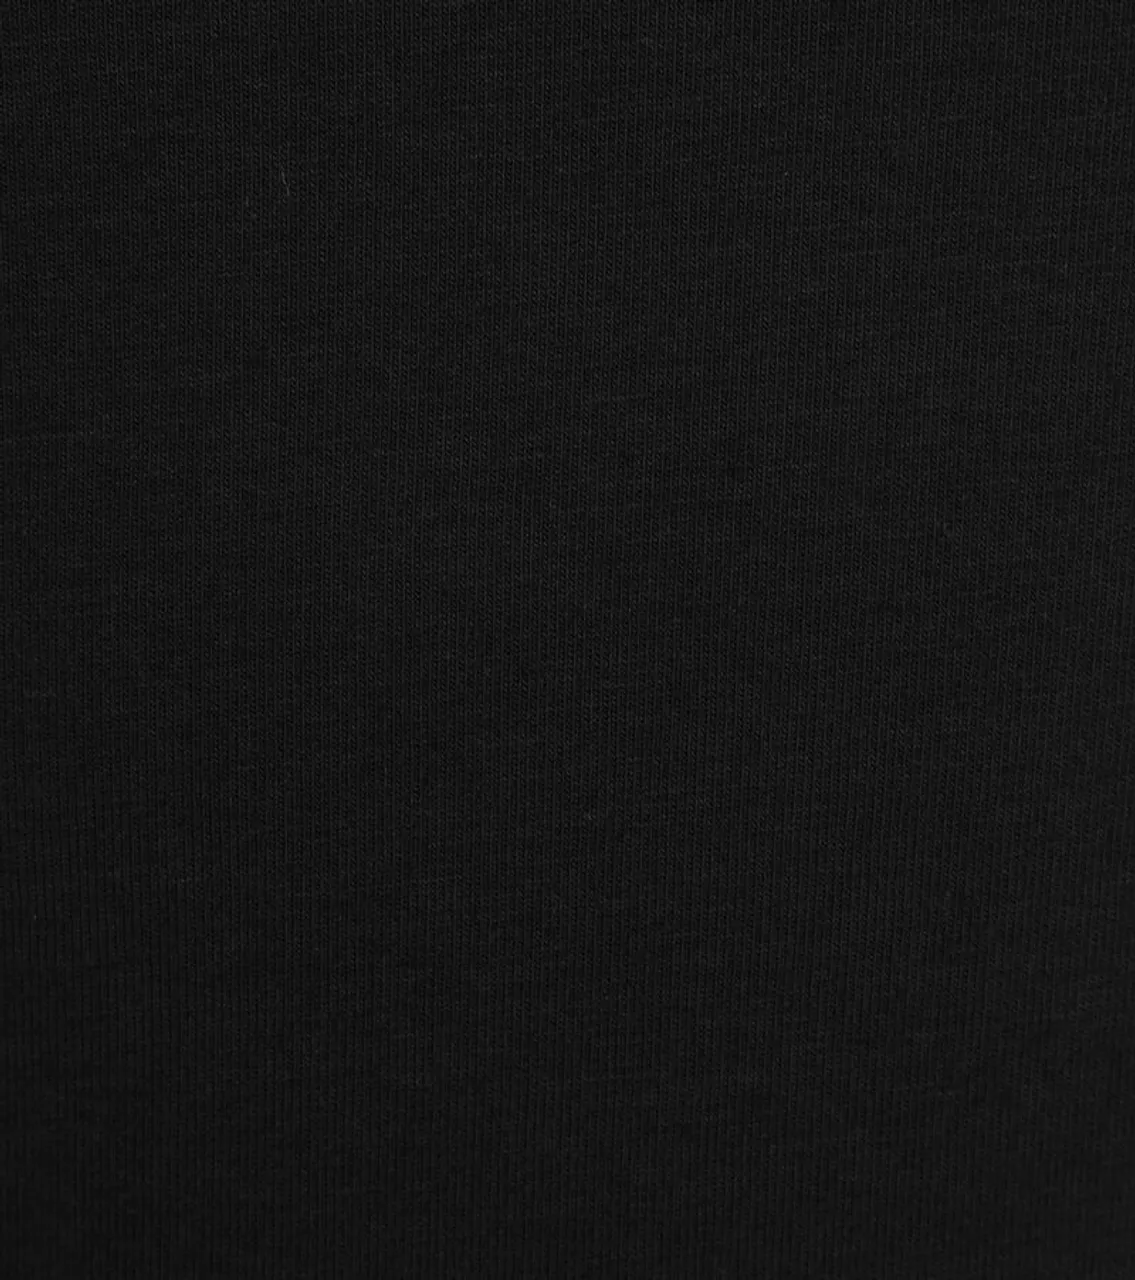 Alan Red Oklahoma T-Shirt Stretch Zwart (2-Pack)